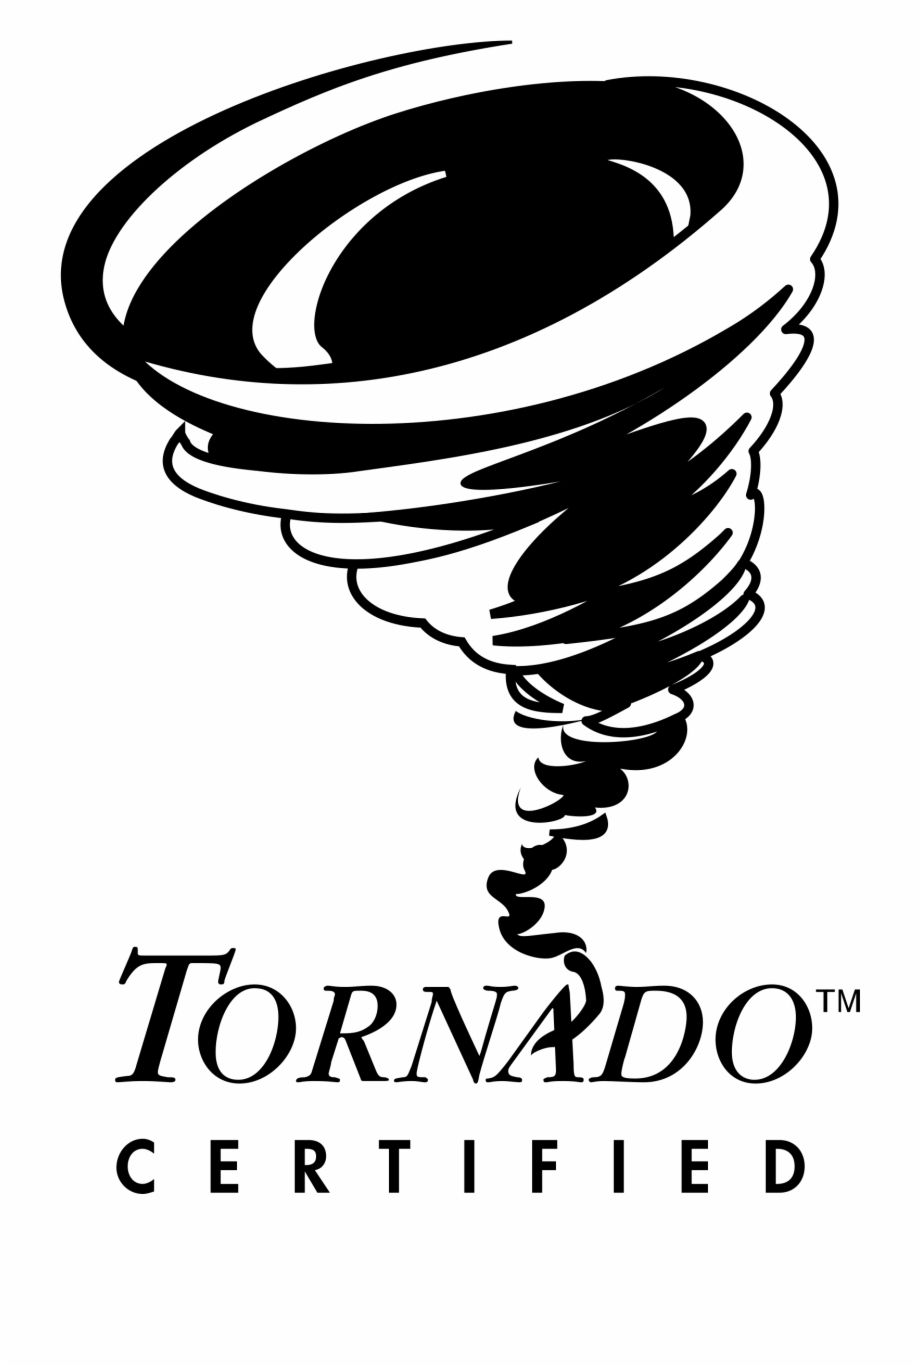 Tornado Certified Logo Png Transparent Tornado Vector